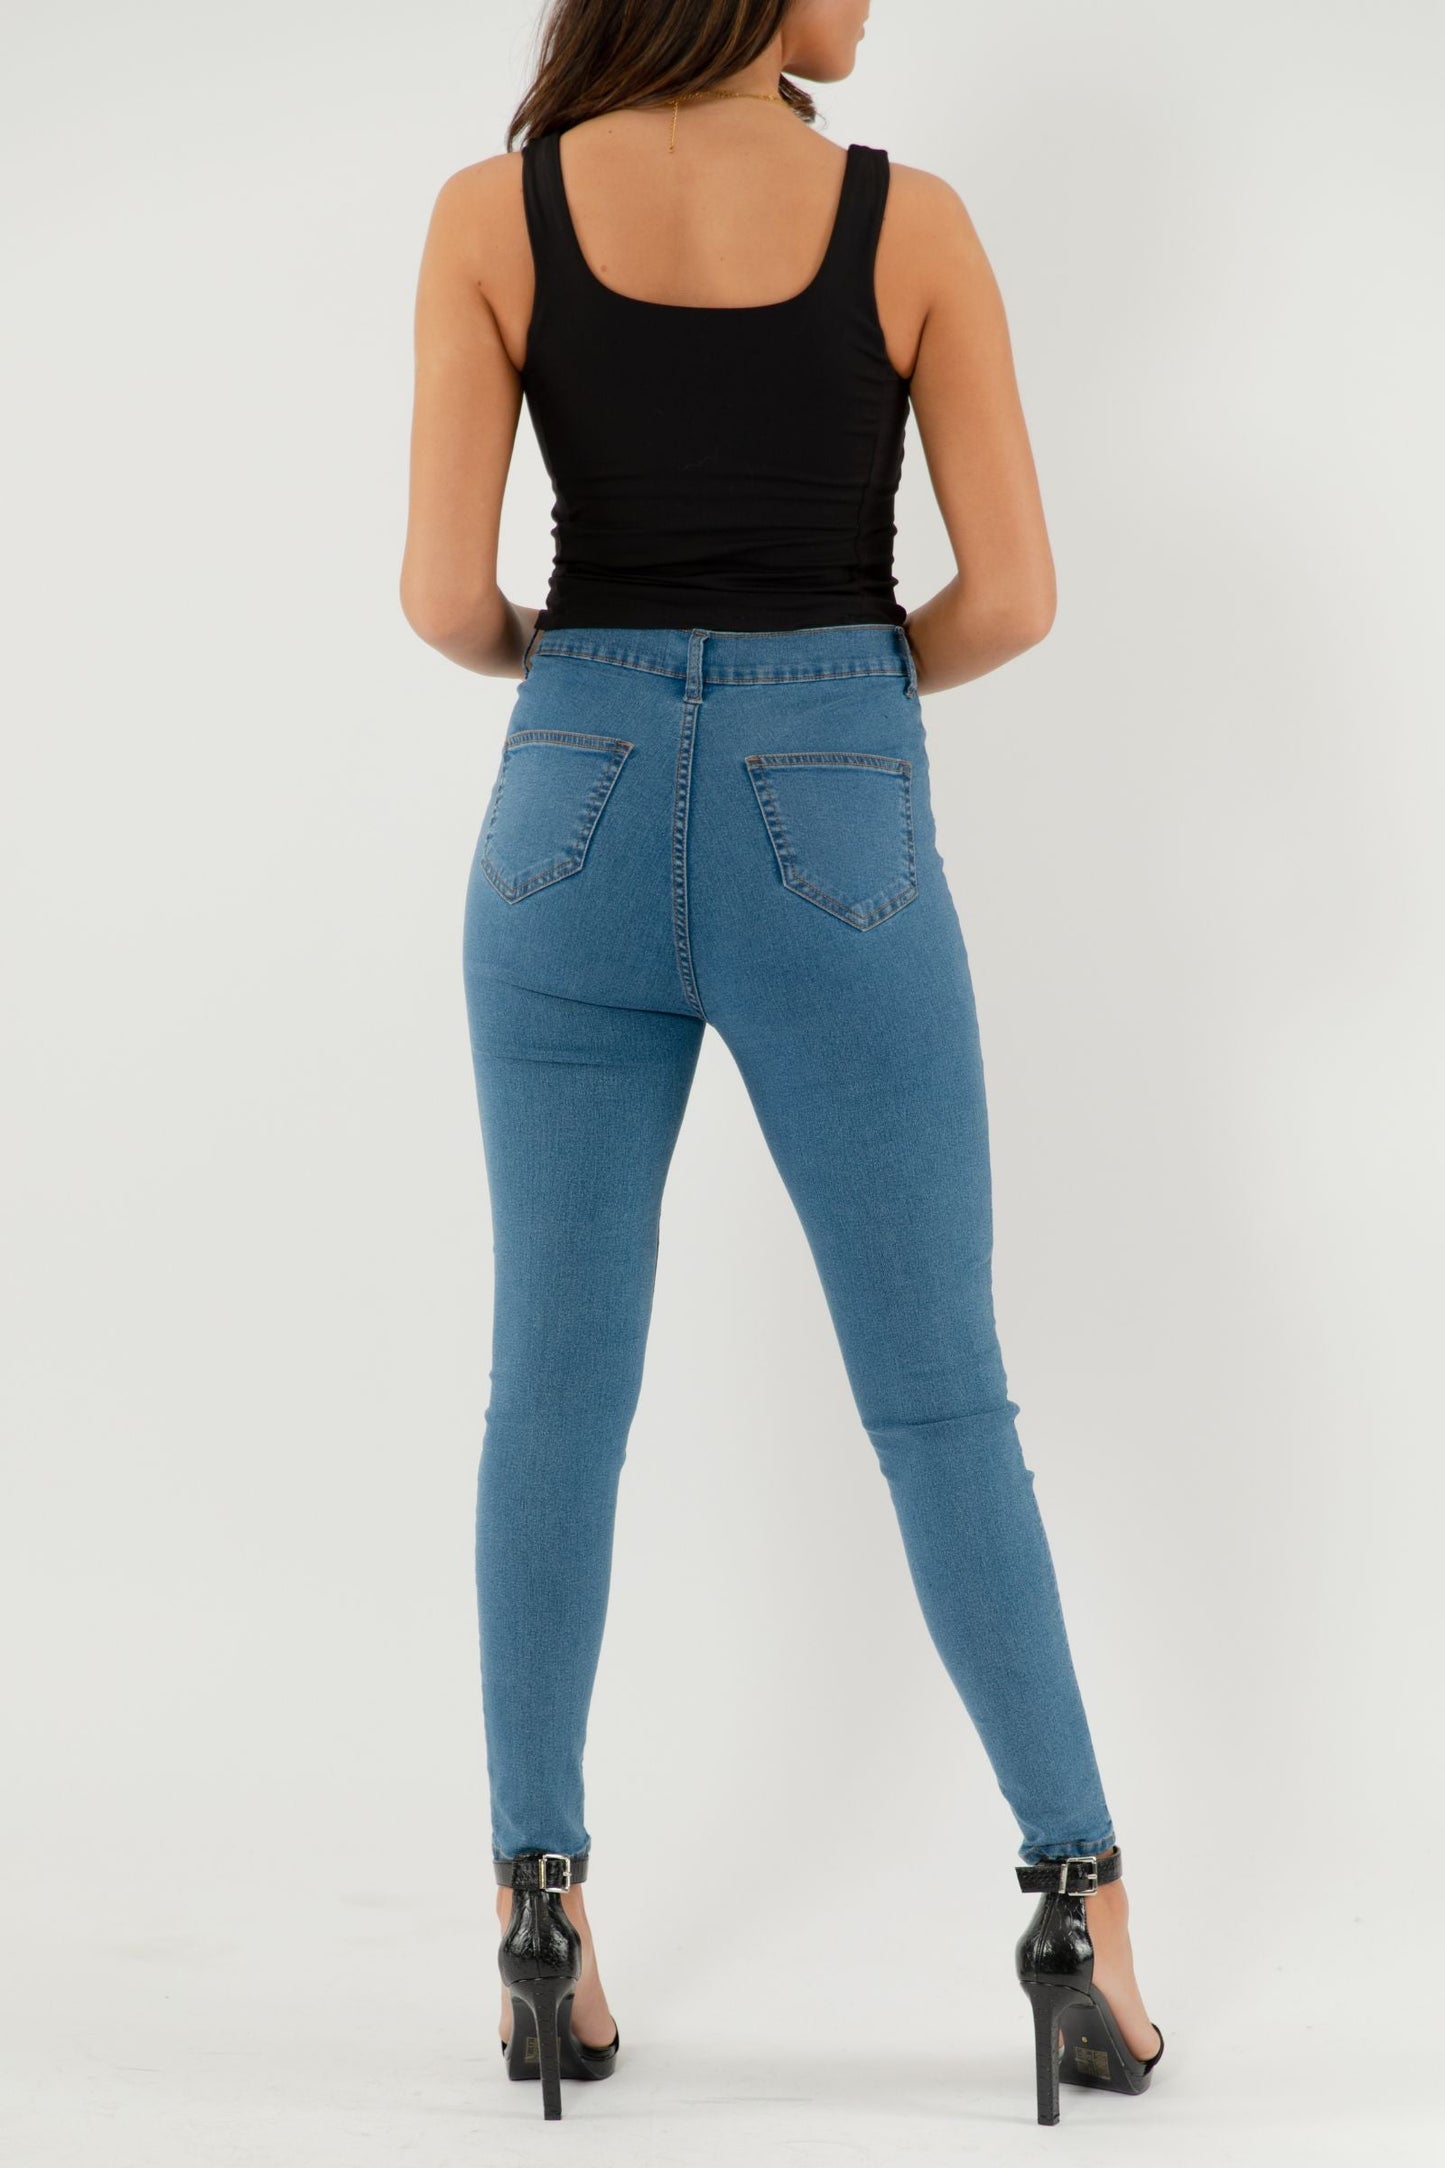 JESSI Stretchy Denim High Waist Disco Jeans - Mid Blue